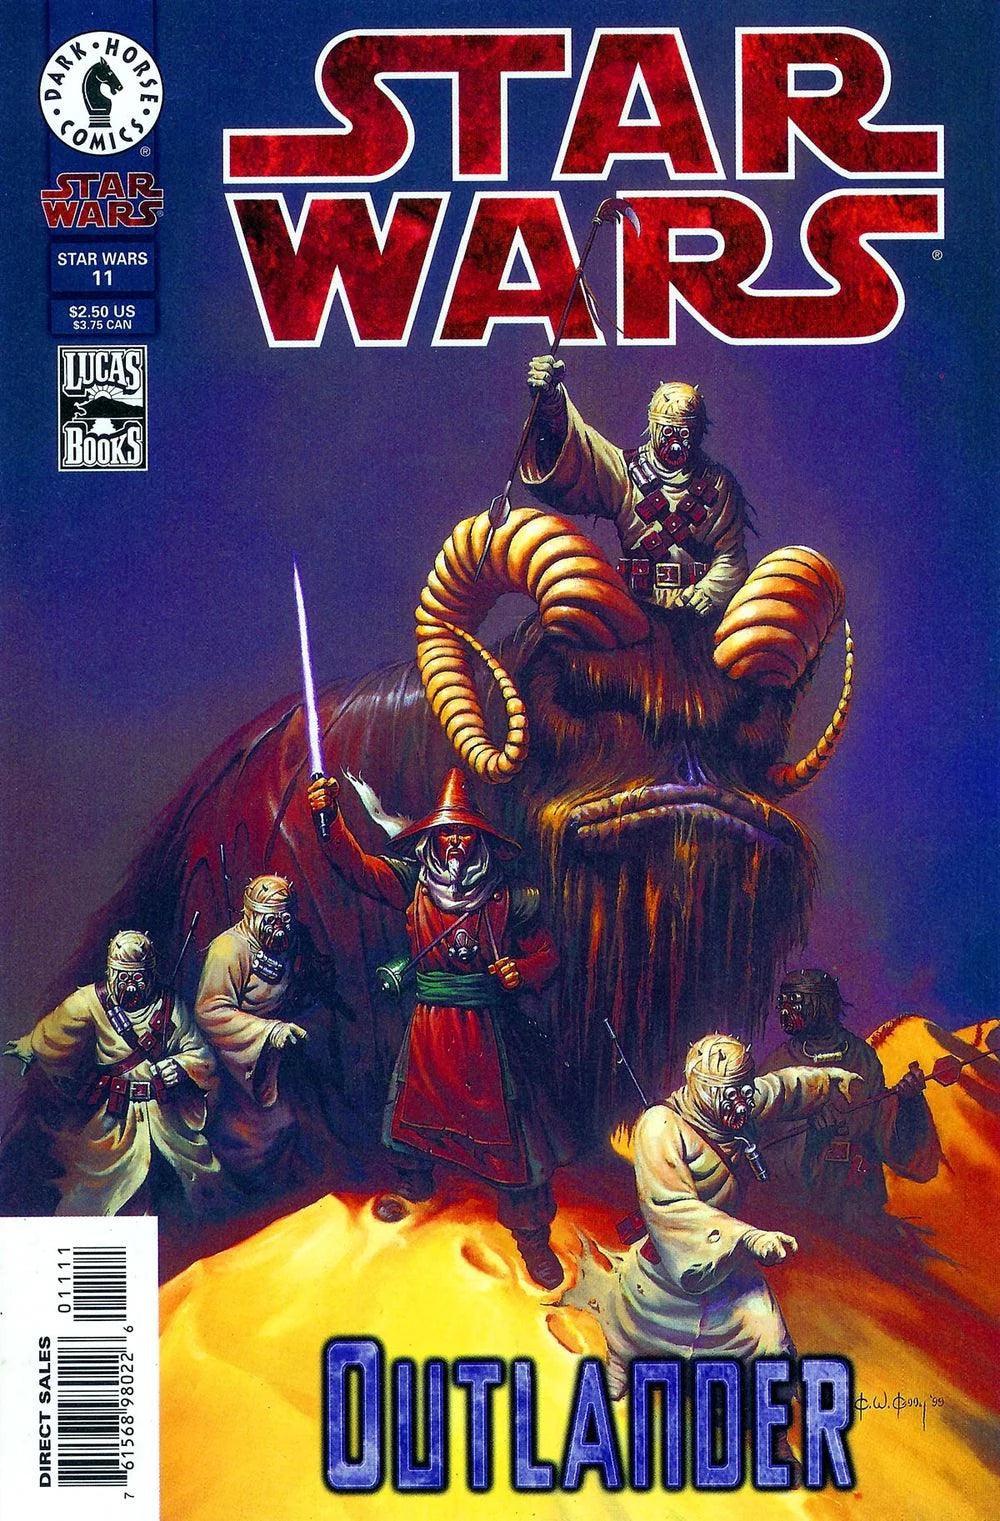 STAR WARS (1998) #11 - Kings Comics